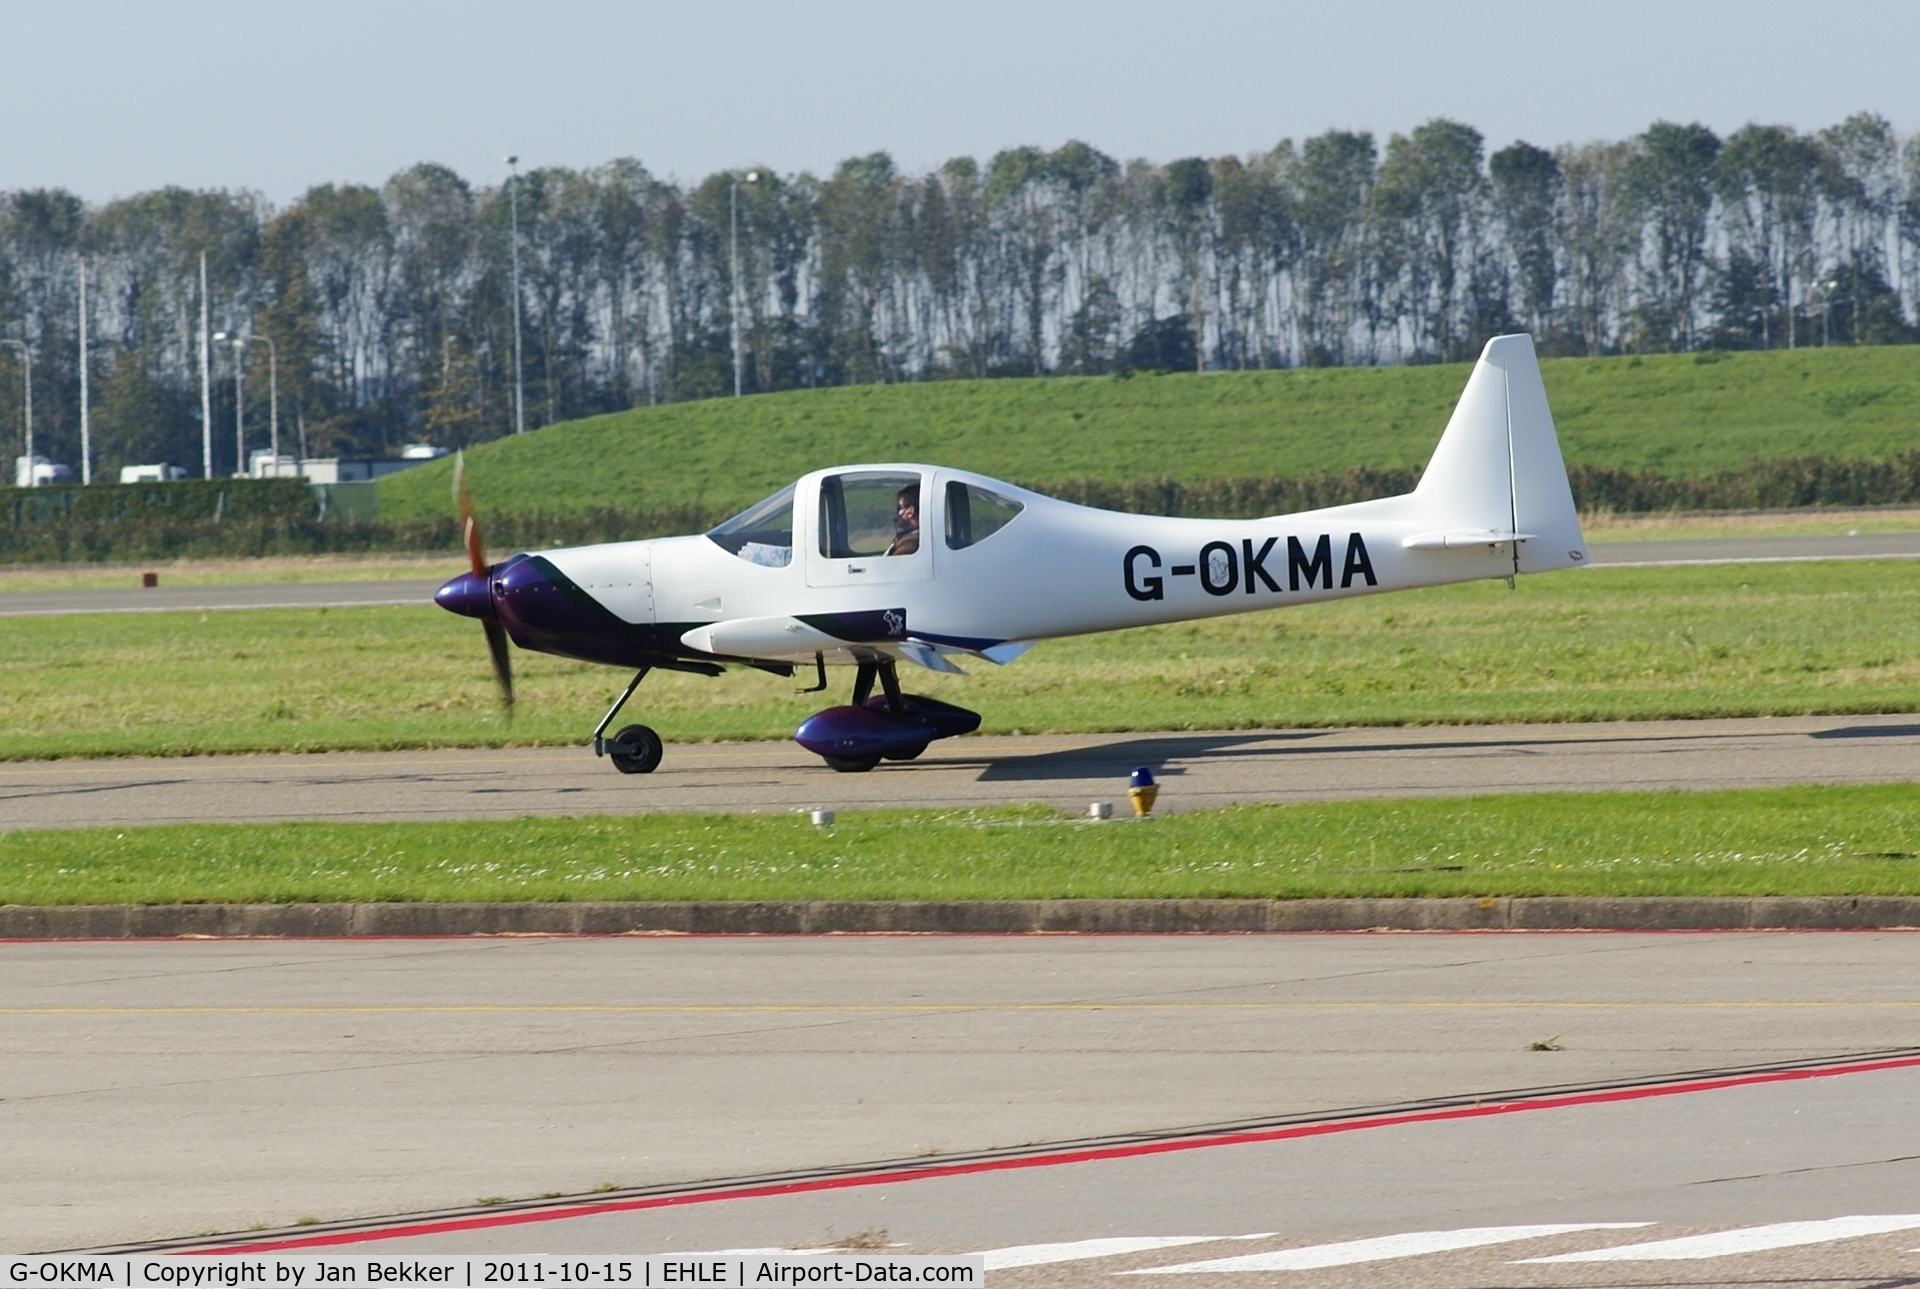 G-OKMA, 2002 Tri-R Kis TR-1 C/N PFA 239-12808, Heading to the runway at Lelystad Airport for take off.